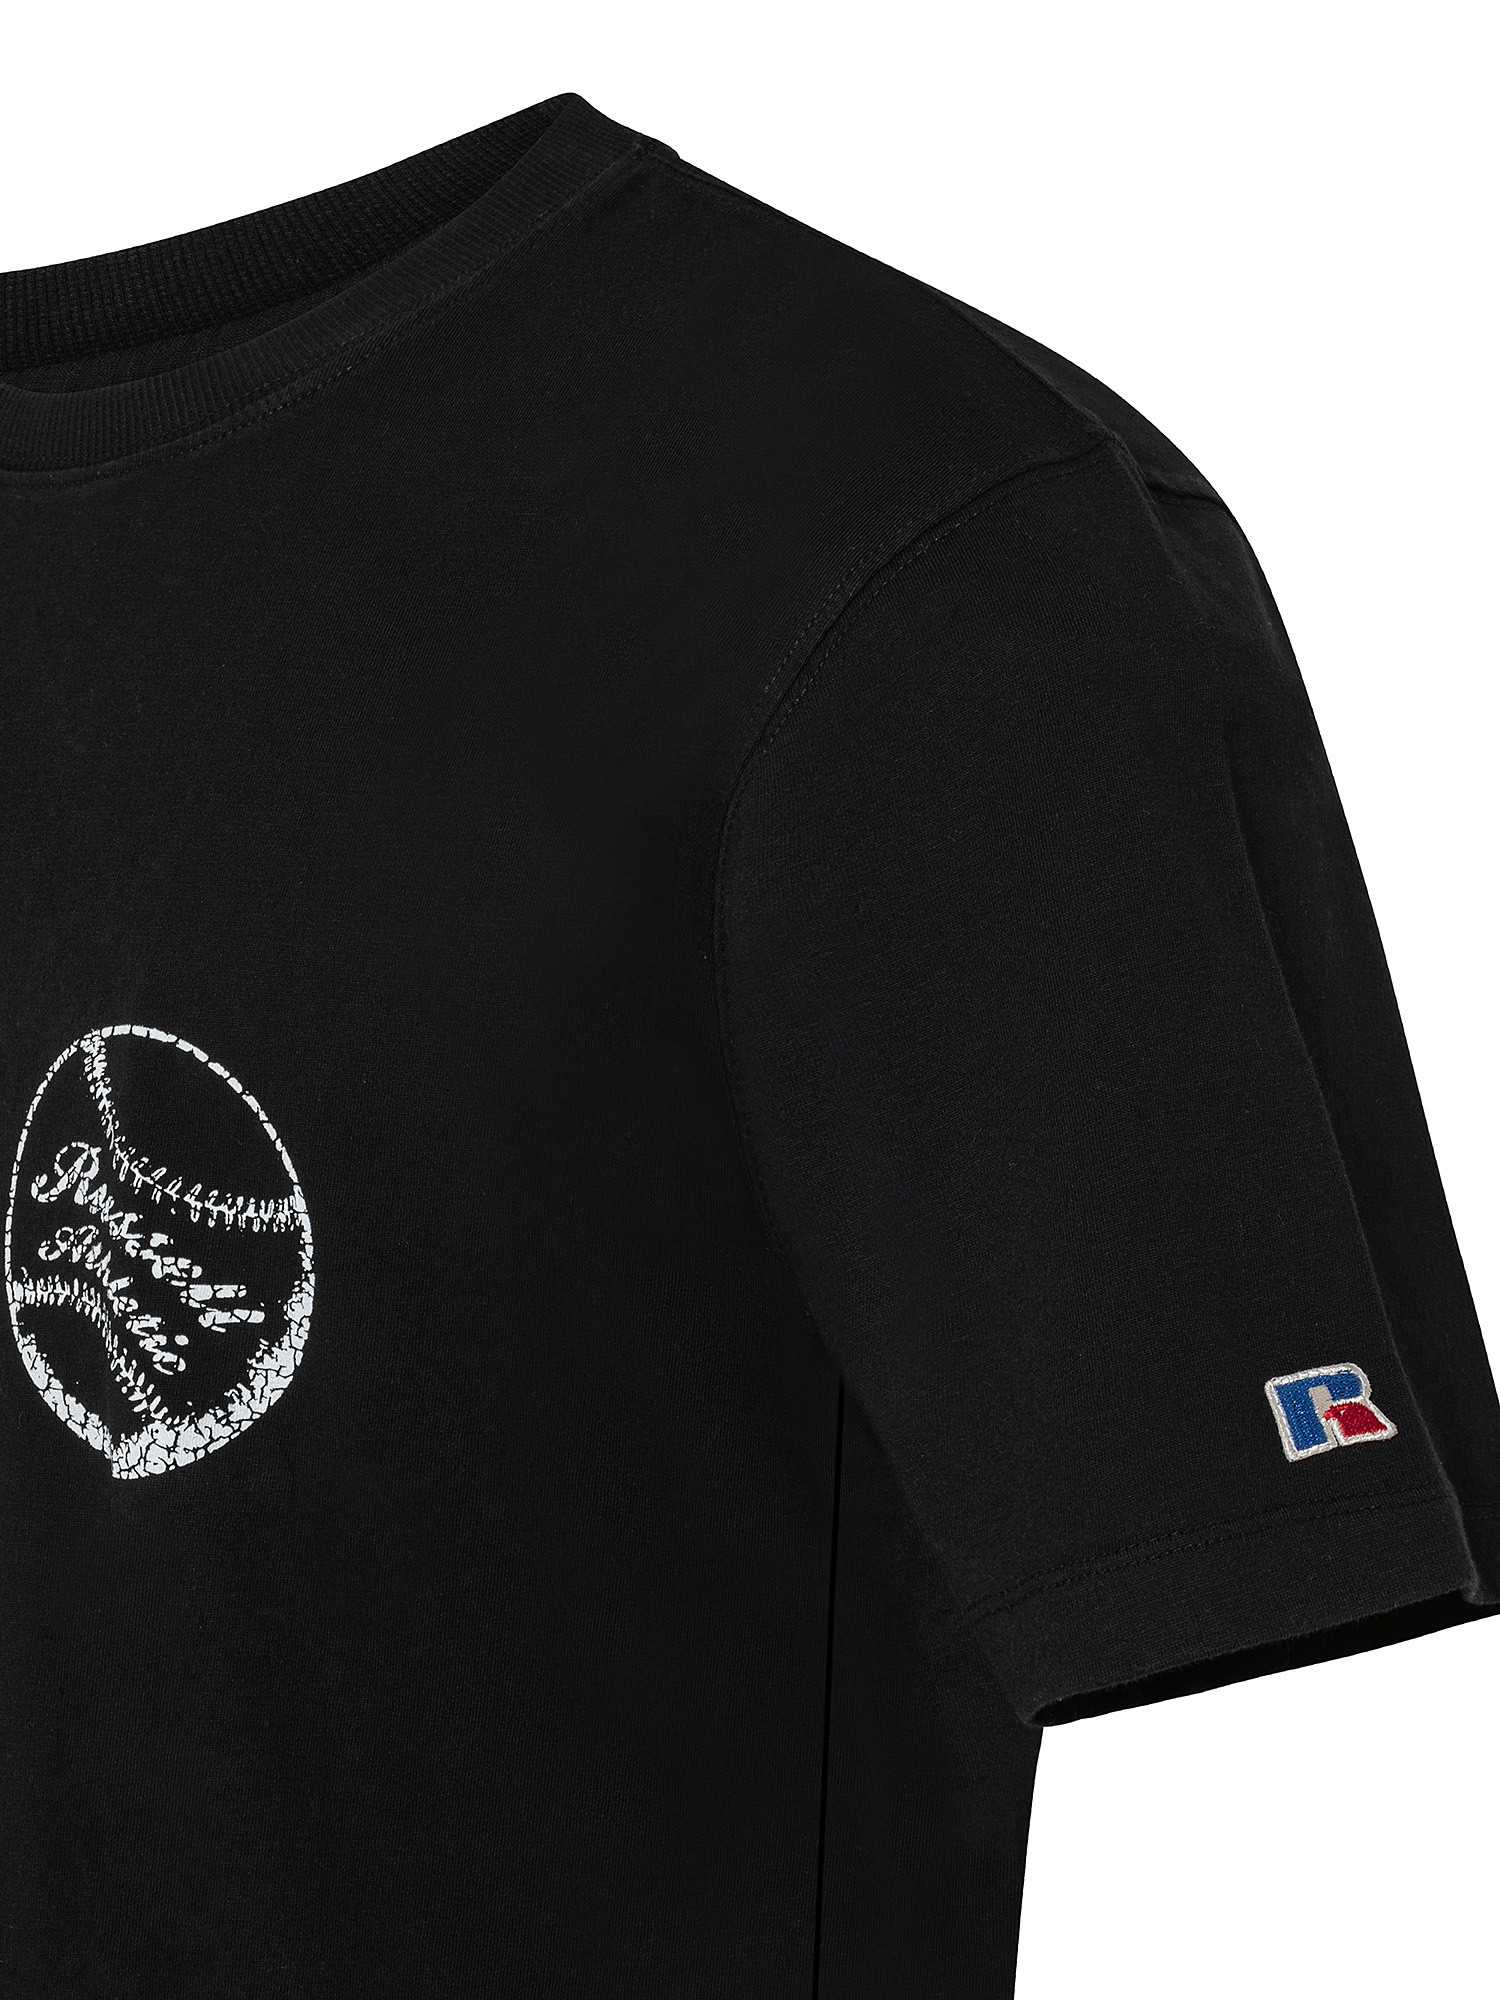 Hank Baseball T-Shirt, Black, large image number 2